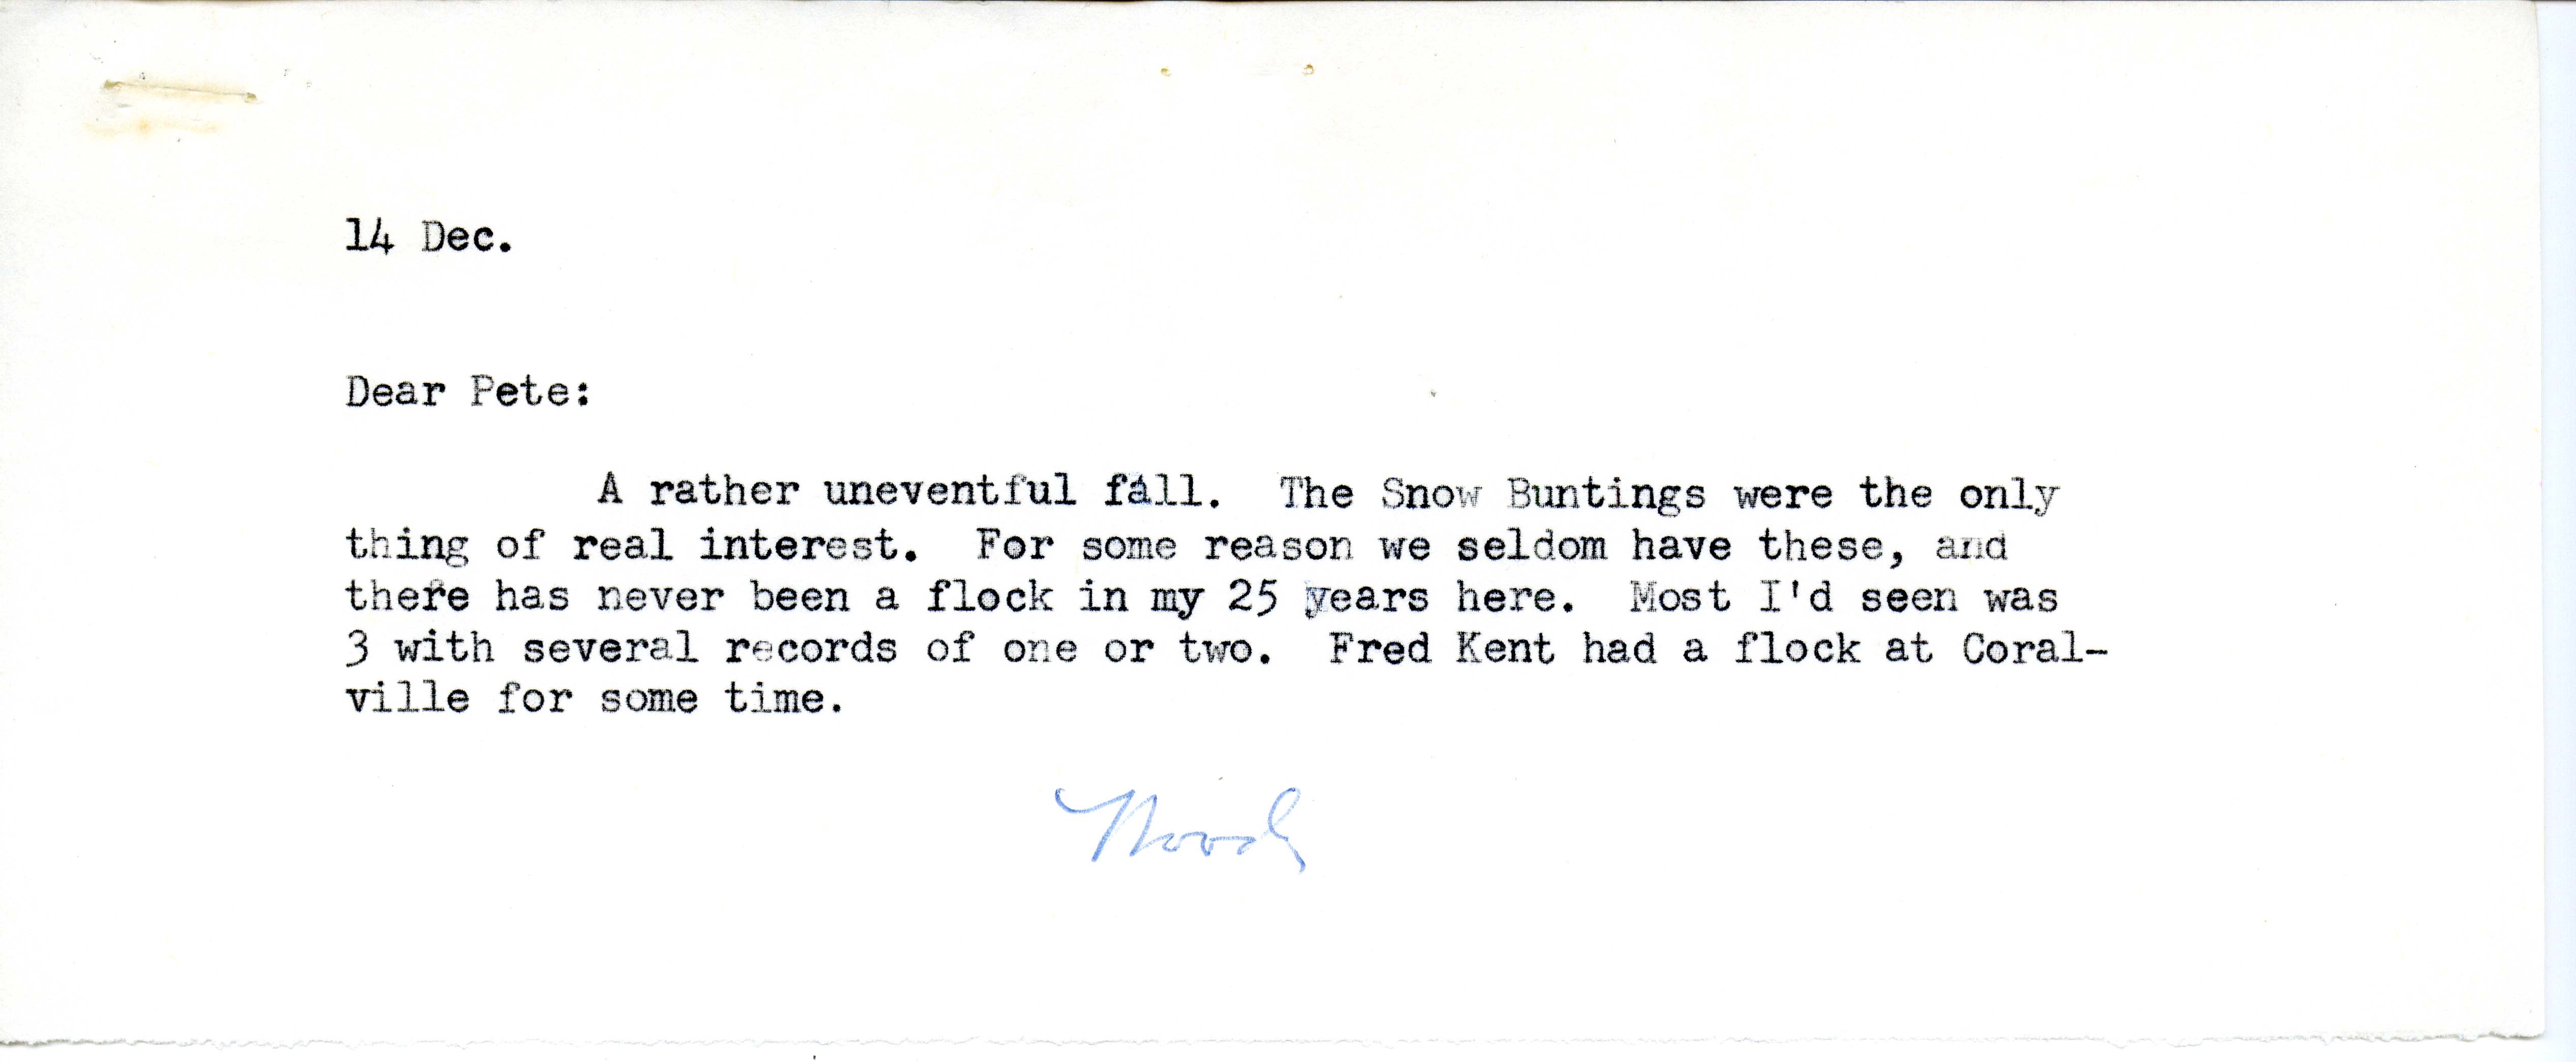 Iowa Ornithologists' Union, Quarterly field report, fall 1967